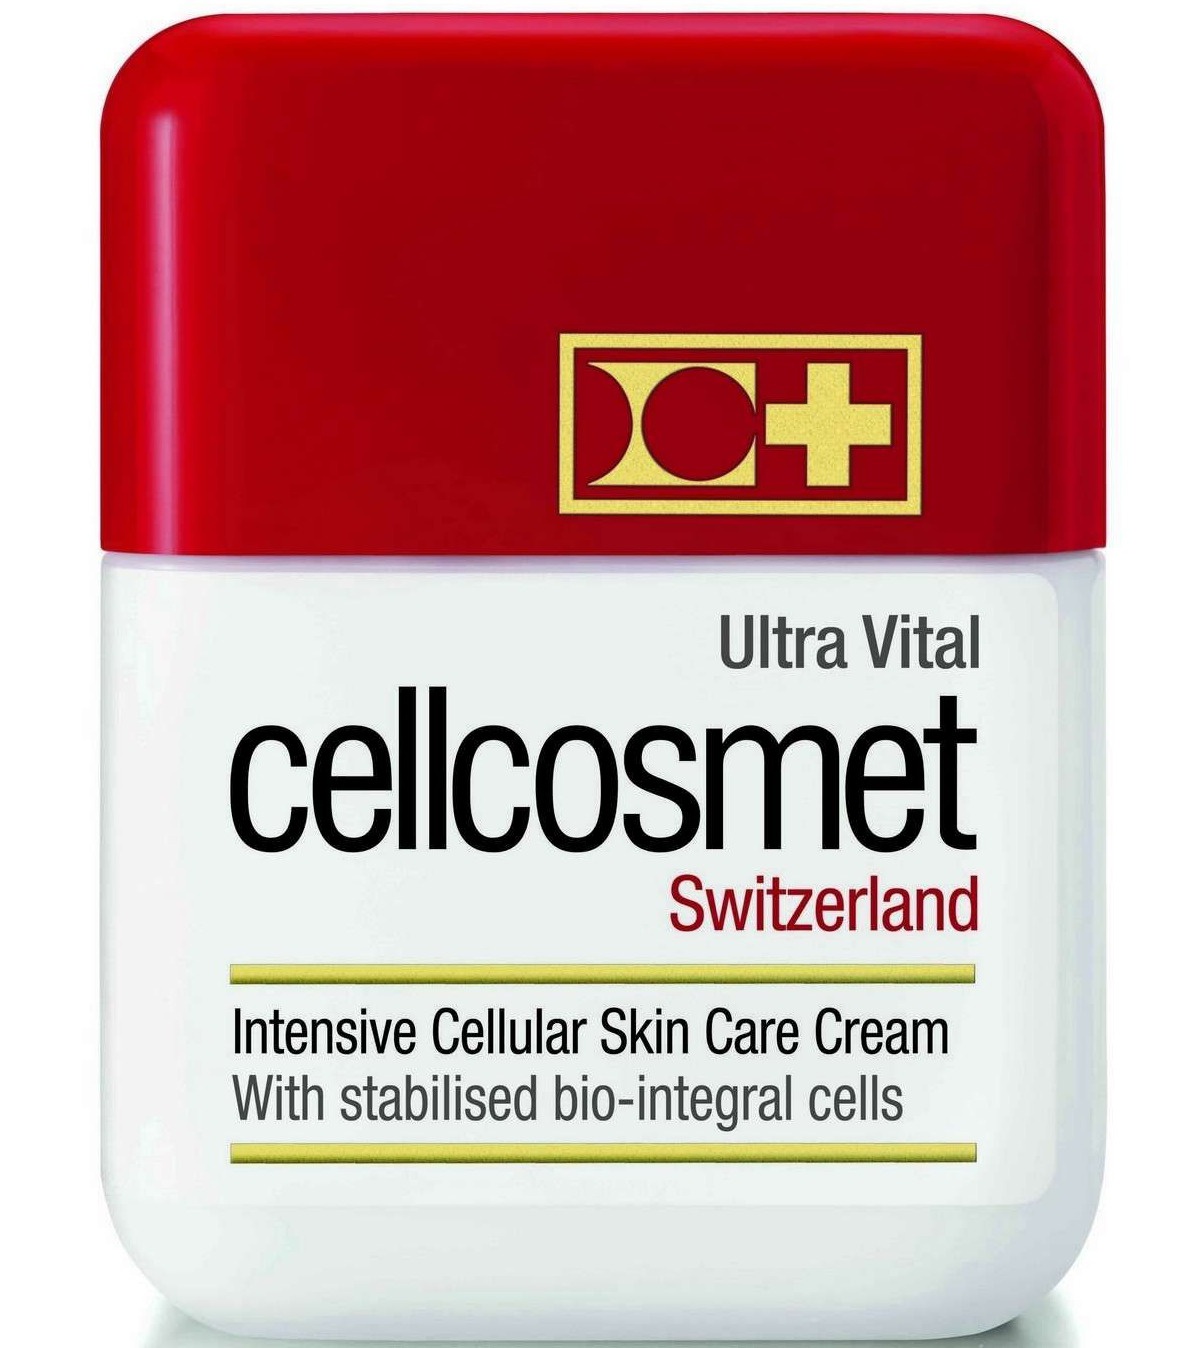 Cellcosmet Ultra Vital Intensive Cellular Skin Care Cream